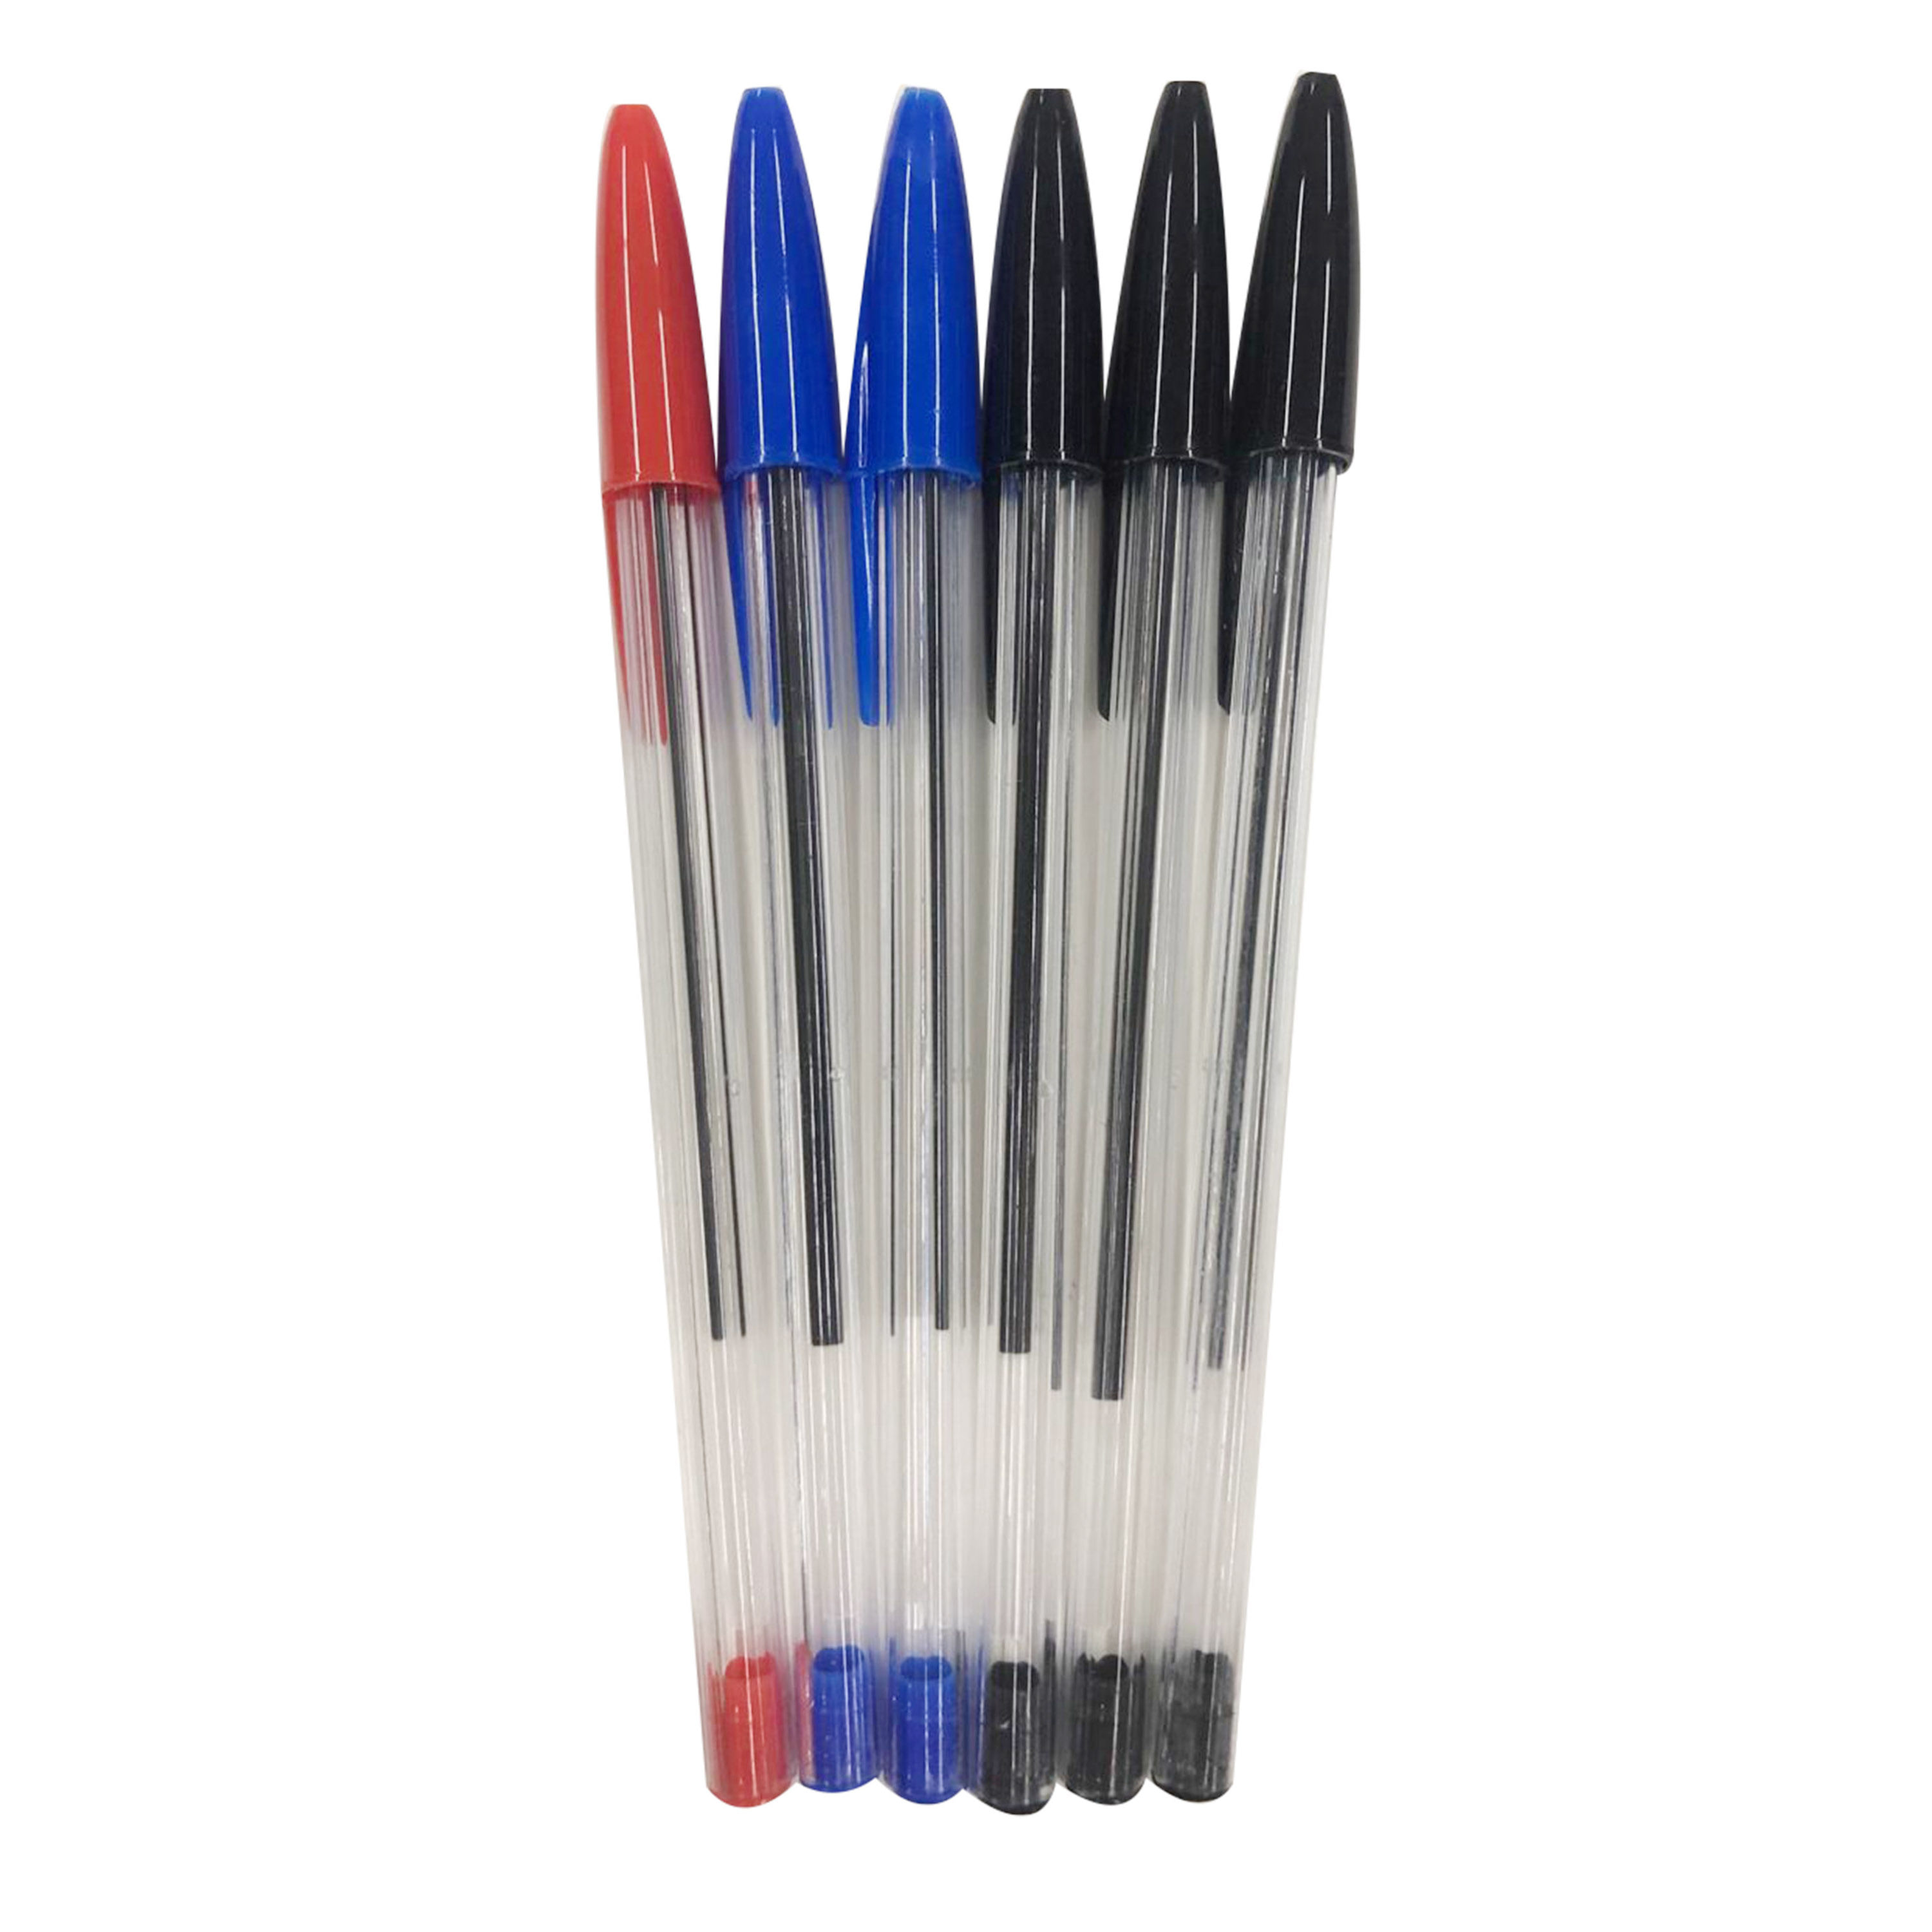 Comprar Lapices de Color Pen Gear, caja -12 uds, Walmart Costa Rica - Maxi  Palí